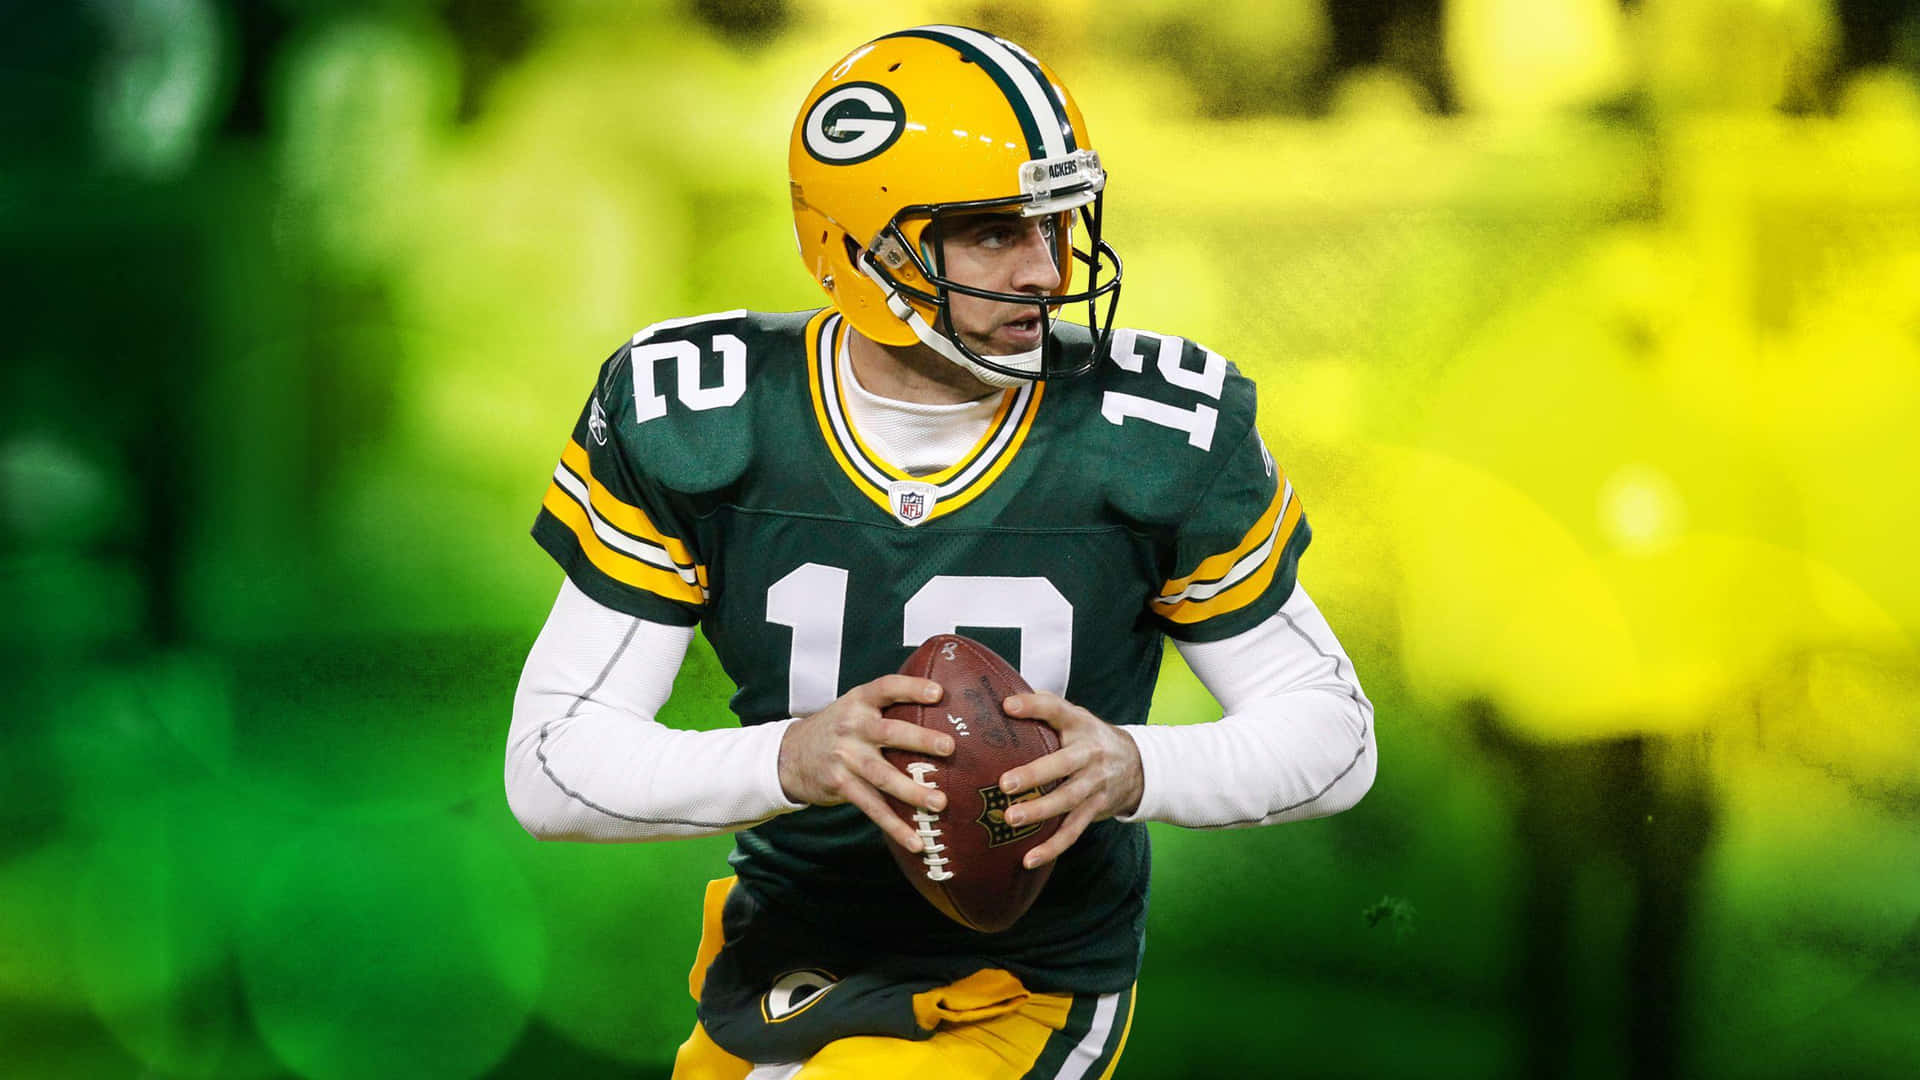 Greenbay Packers Quarterback Aaron Rodgers - Green Bay Packers Quarterback Aaron Rodgers